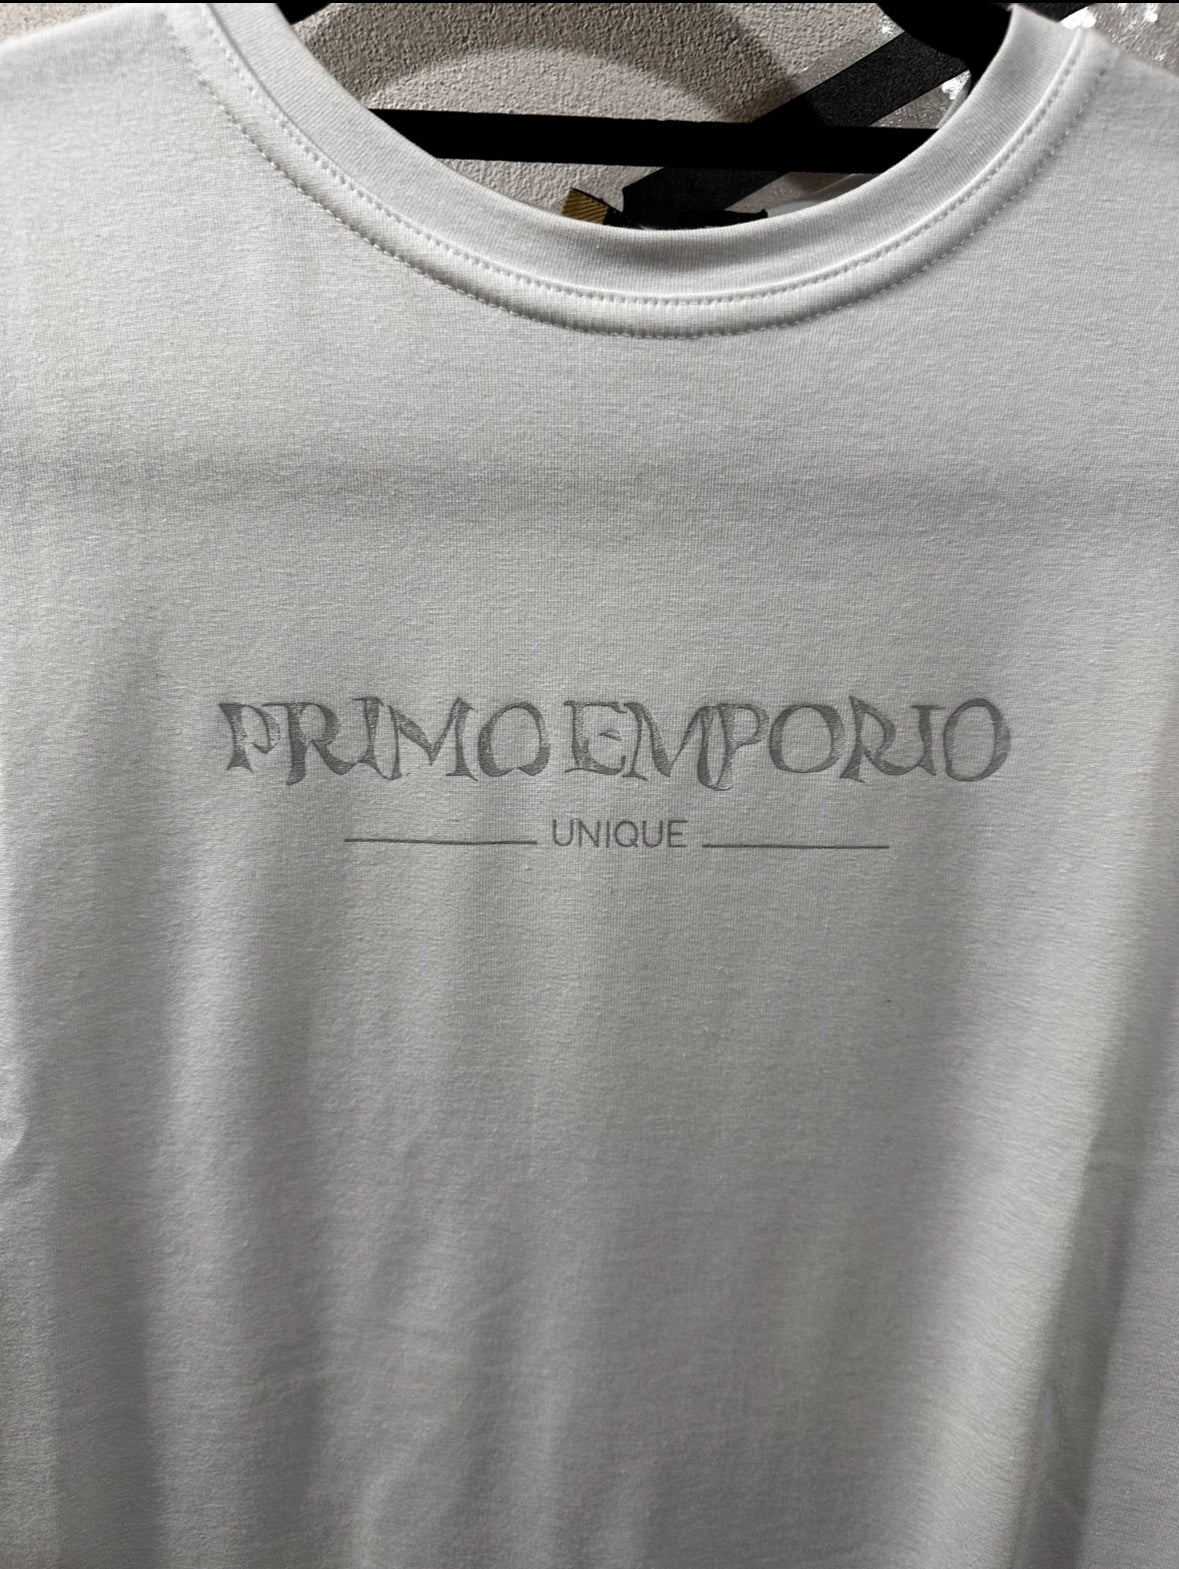 T-shirt Primo emporio unique